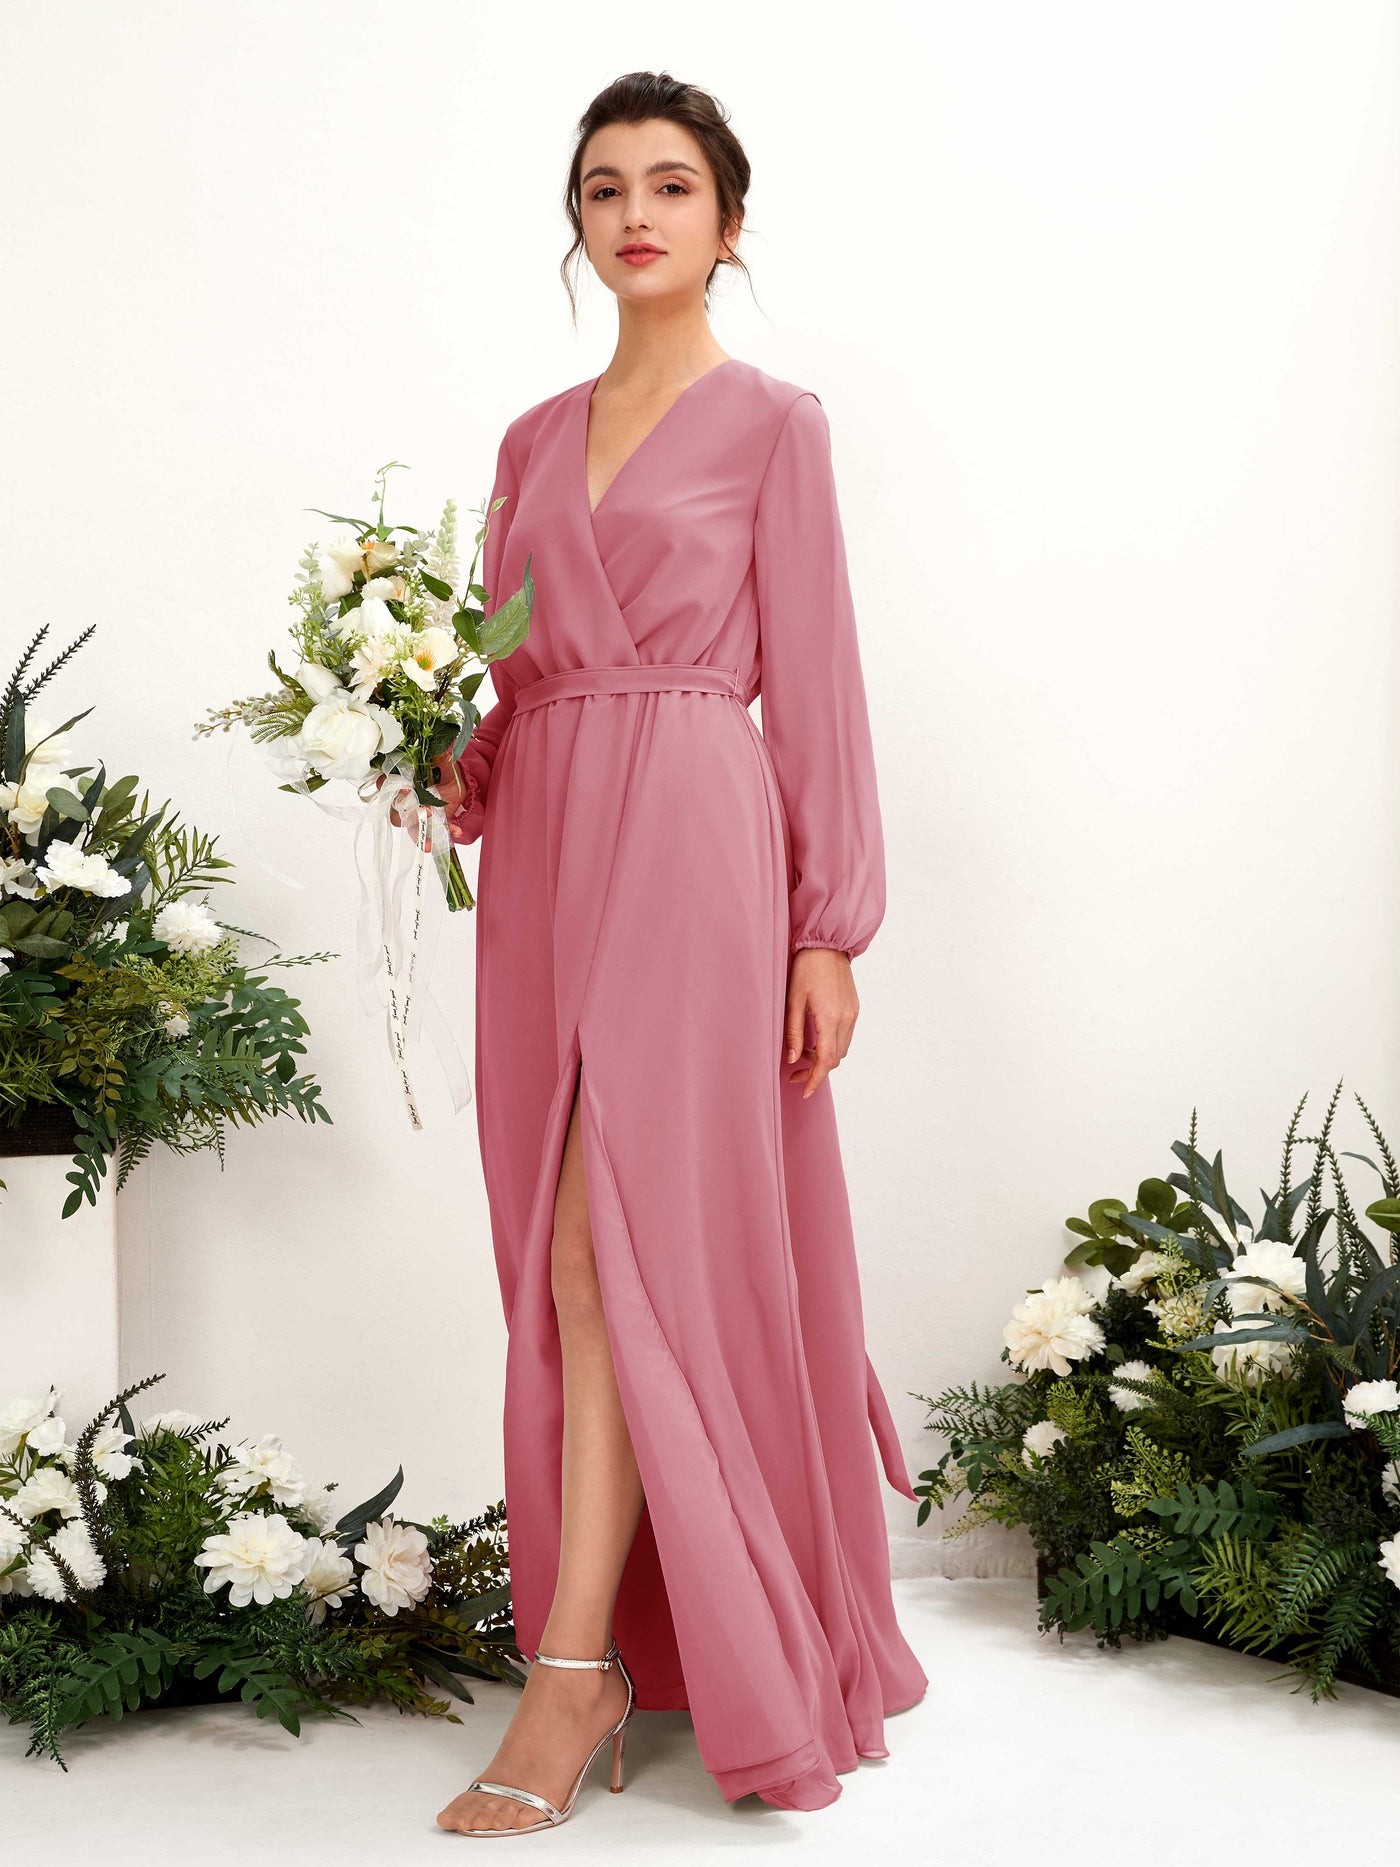 Desert Rose Bridesmaid Dresses Bridesmaid Dress A-line Chiffon V-neck Full Length Long Sleeves Wedding Party Dress (81223211)#color_desert-rose